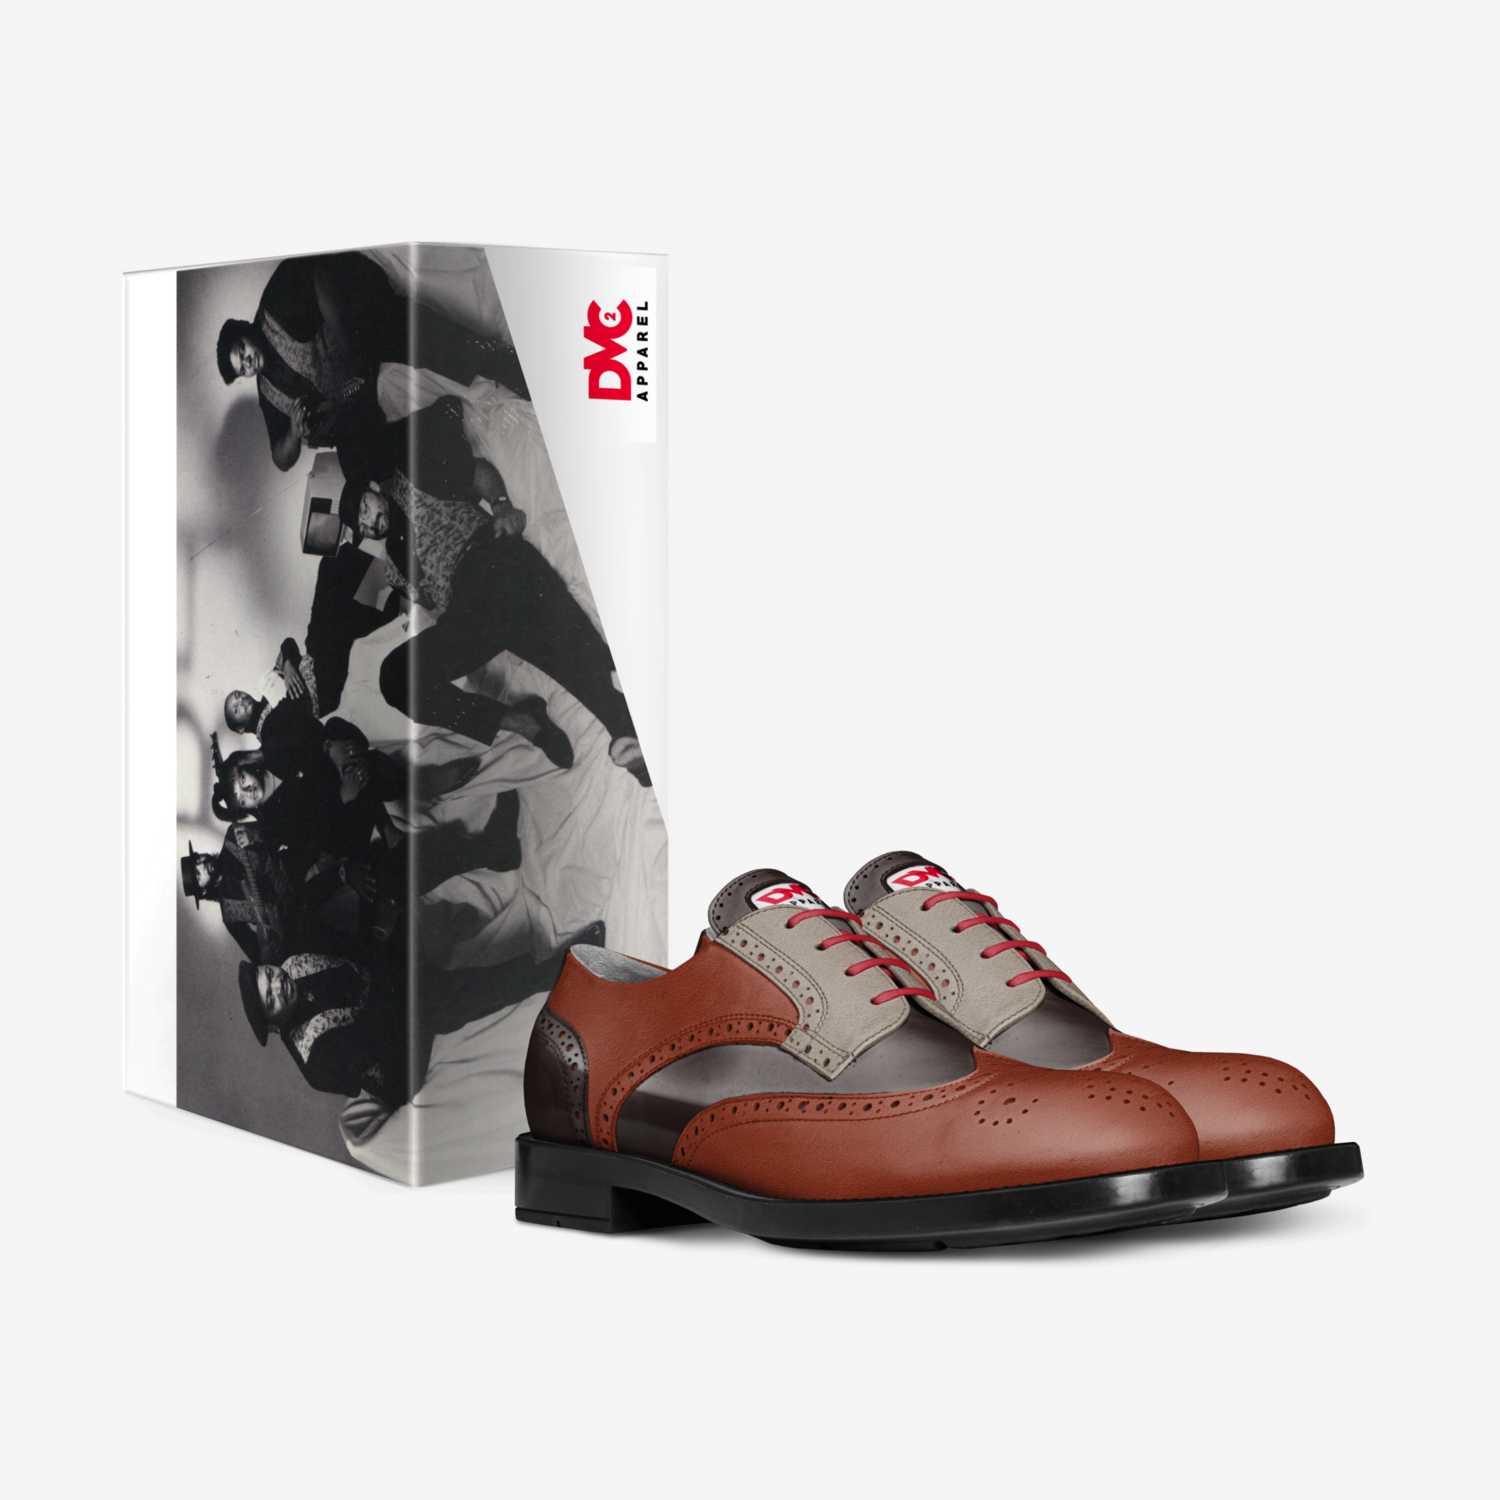 B Natural custom made in Italy shoes by David Callands Jr | Box view